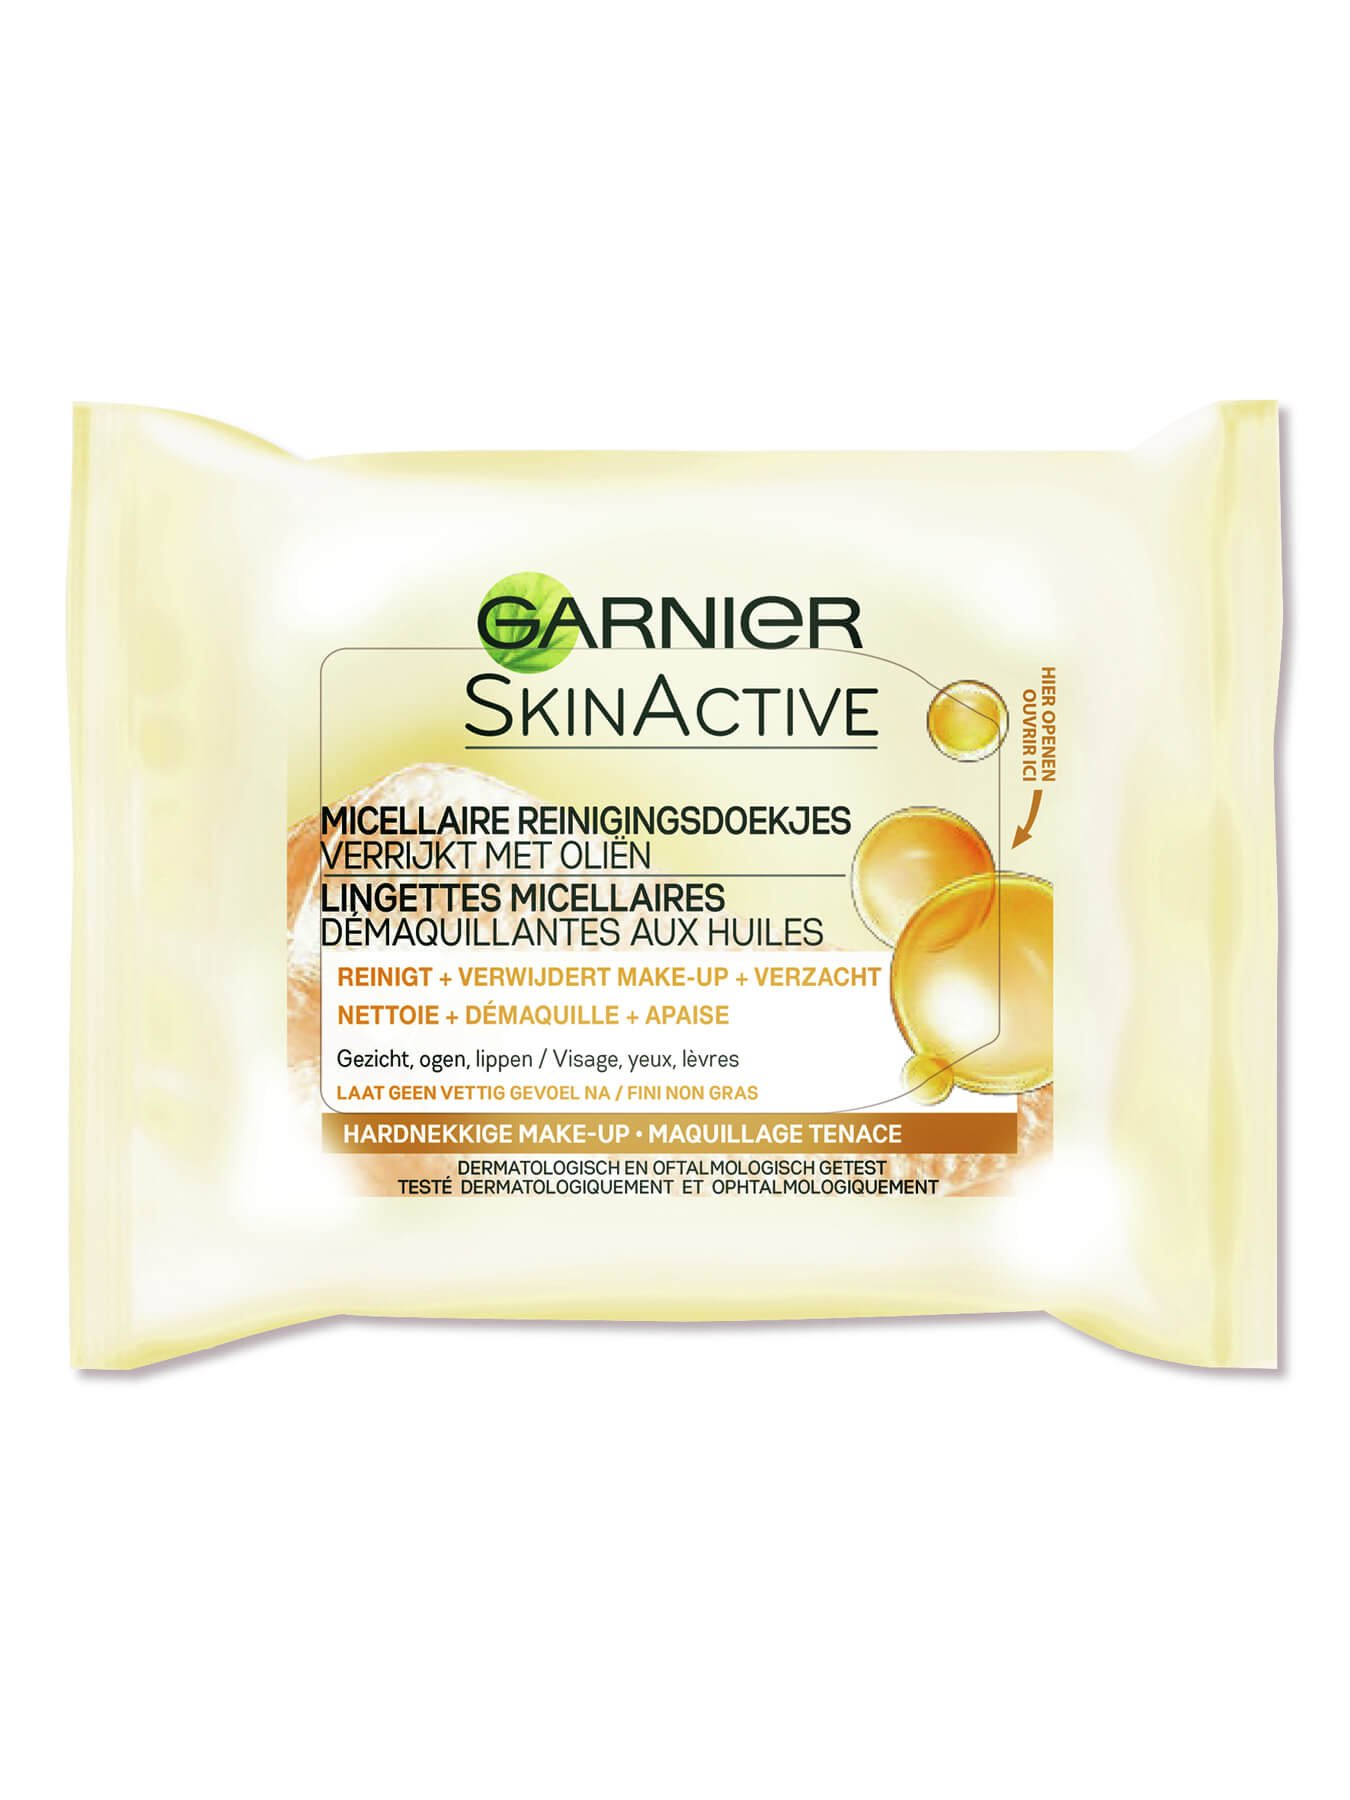 Garnier SkinActive lingettes micellaires